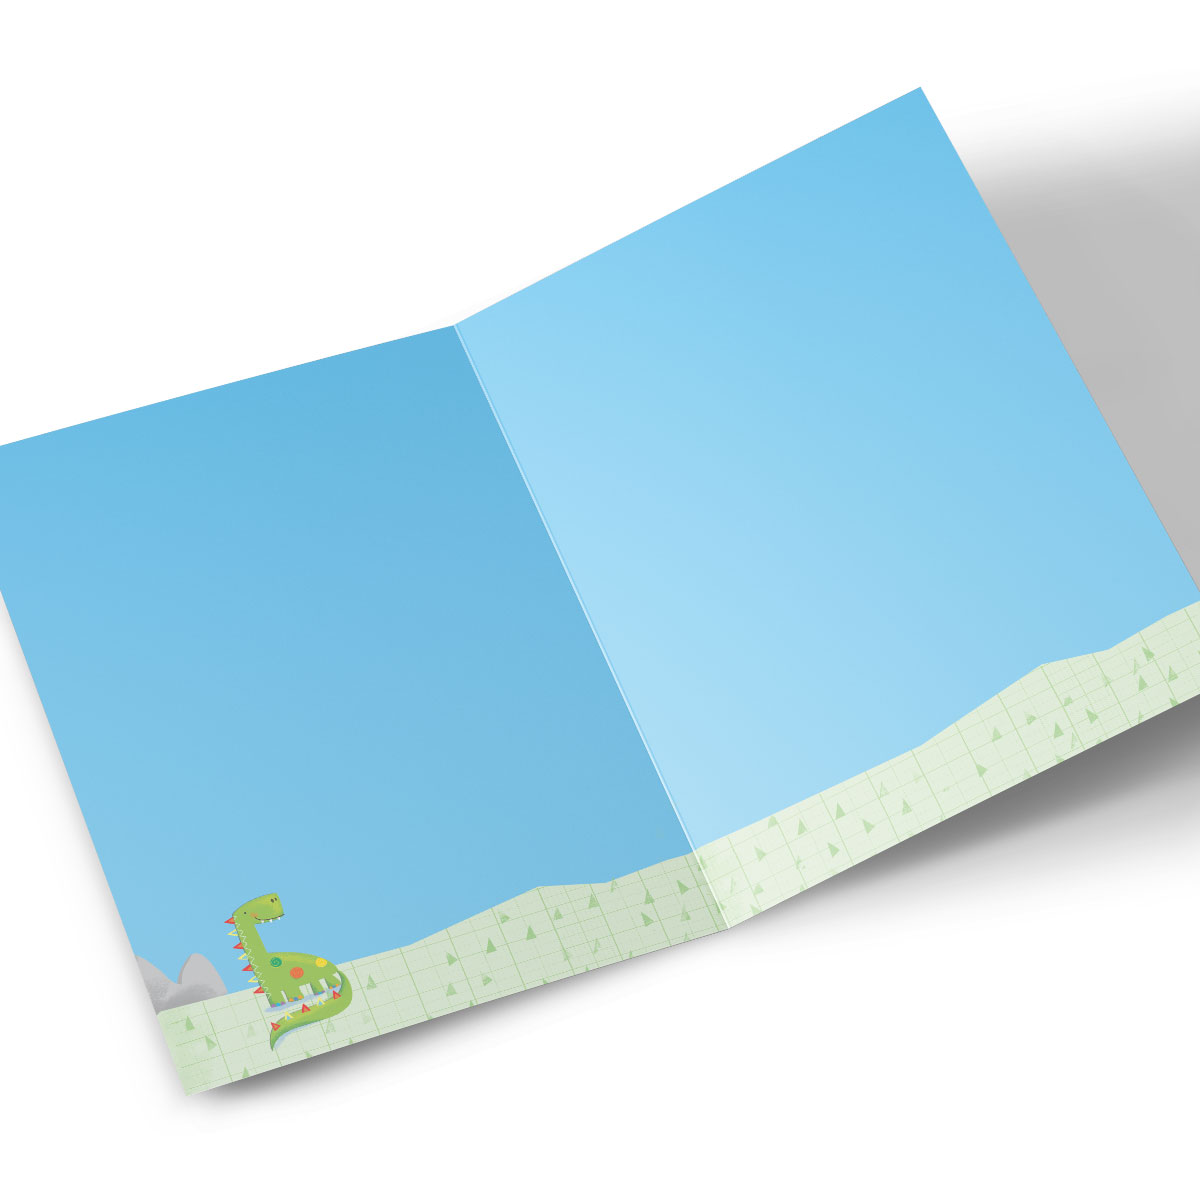 Personalised Editable Age Birthday Card - Green Dinosaur, Grandson